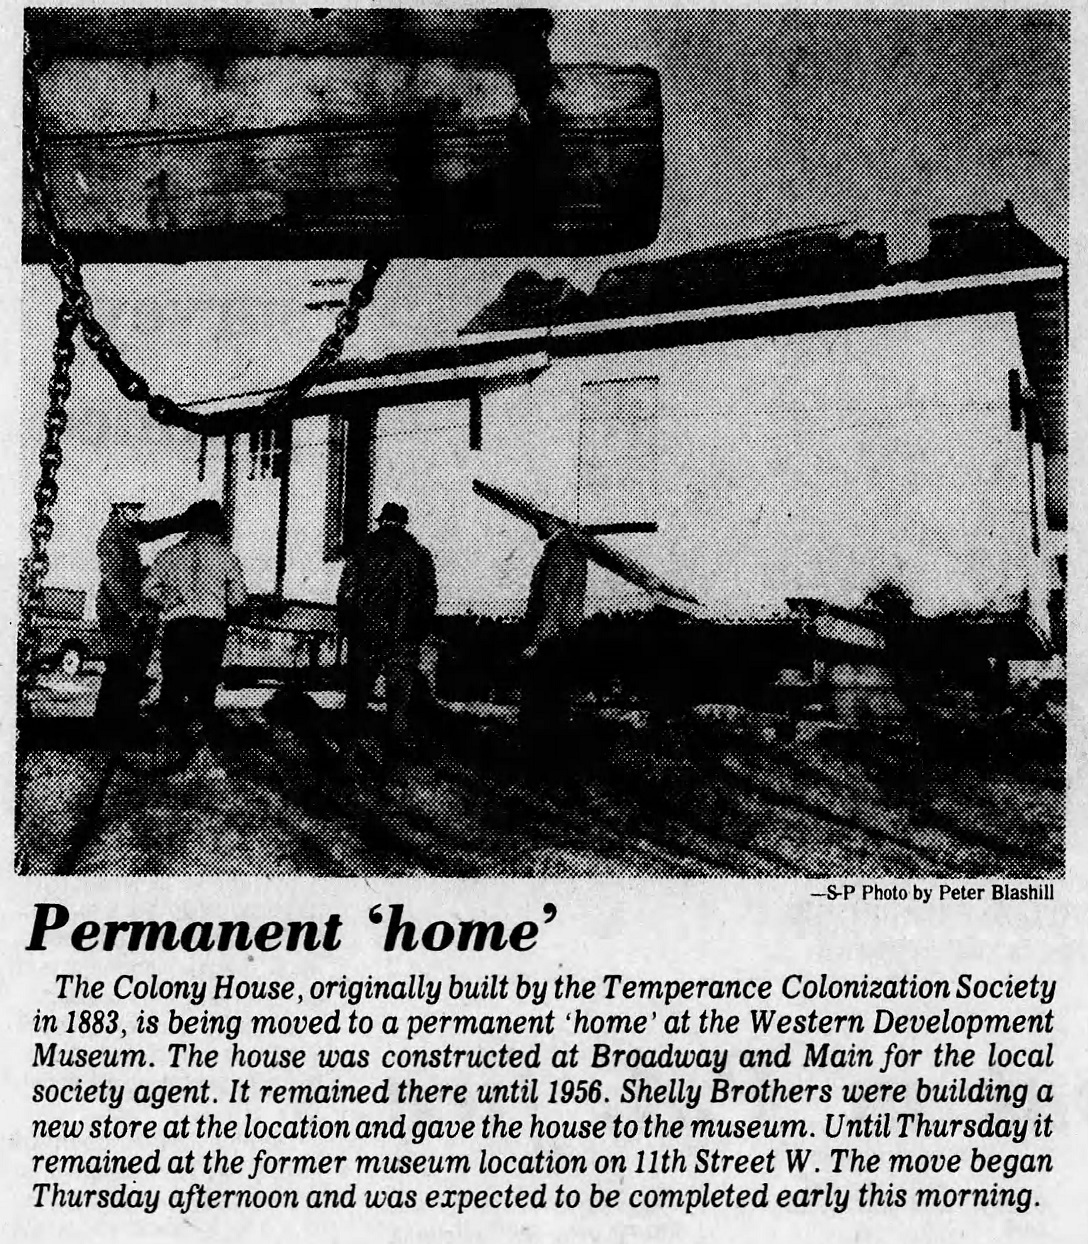 1977 Star Phoenix The Colony House 1883 Temperance Colonization Society heritage history WDM Shelly Brothers photo Nov 4